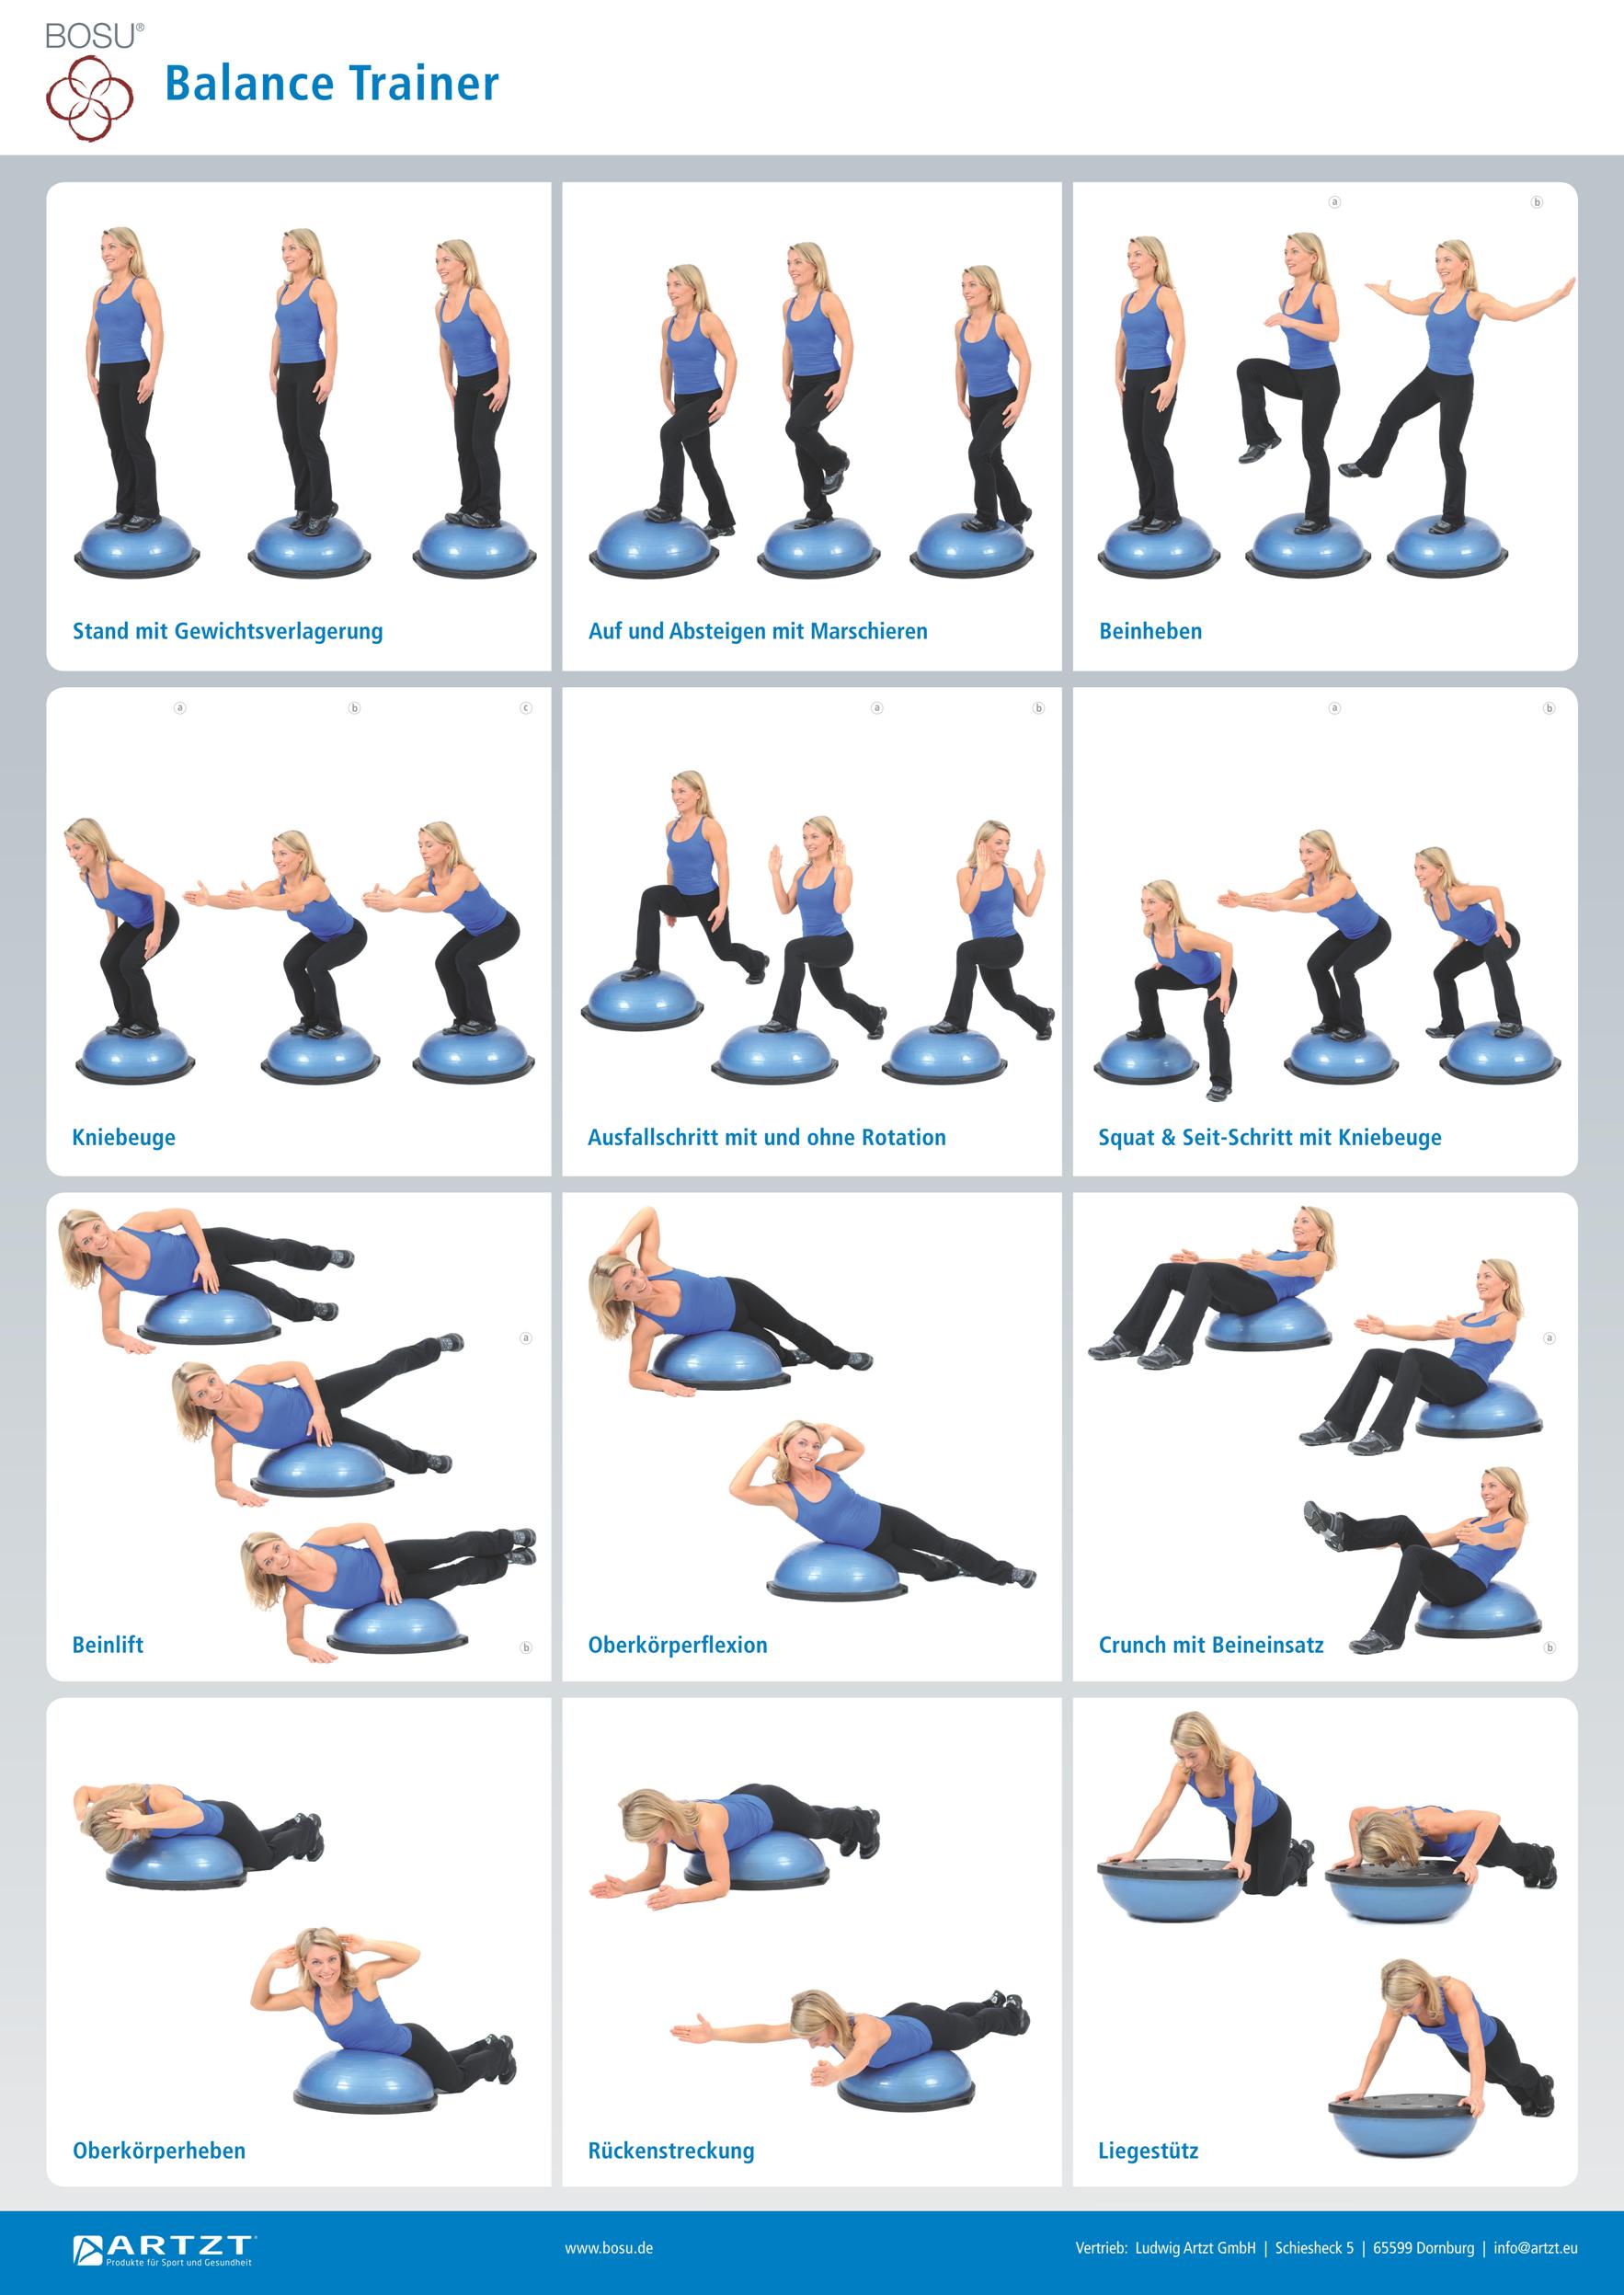 ARTZT - BOSU Balance Trainer | Bälle-Fitness-Massage | Sportmedizin und